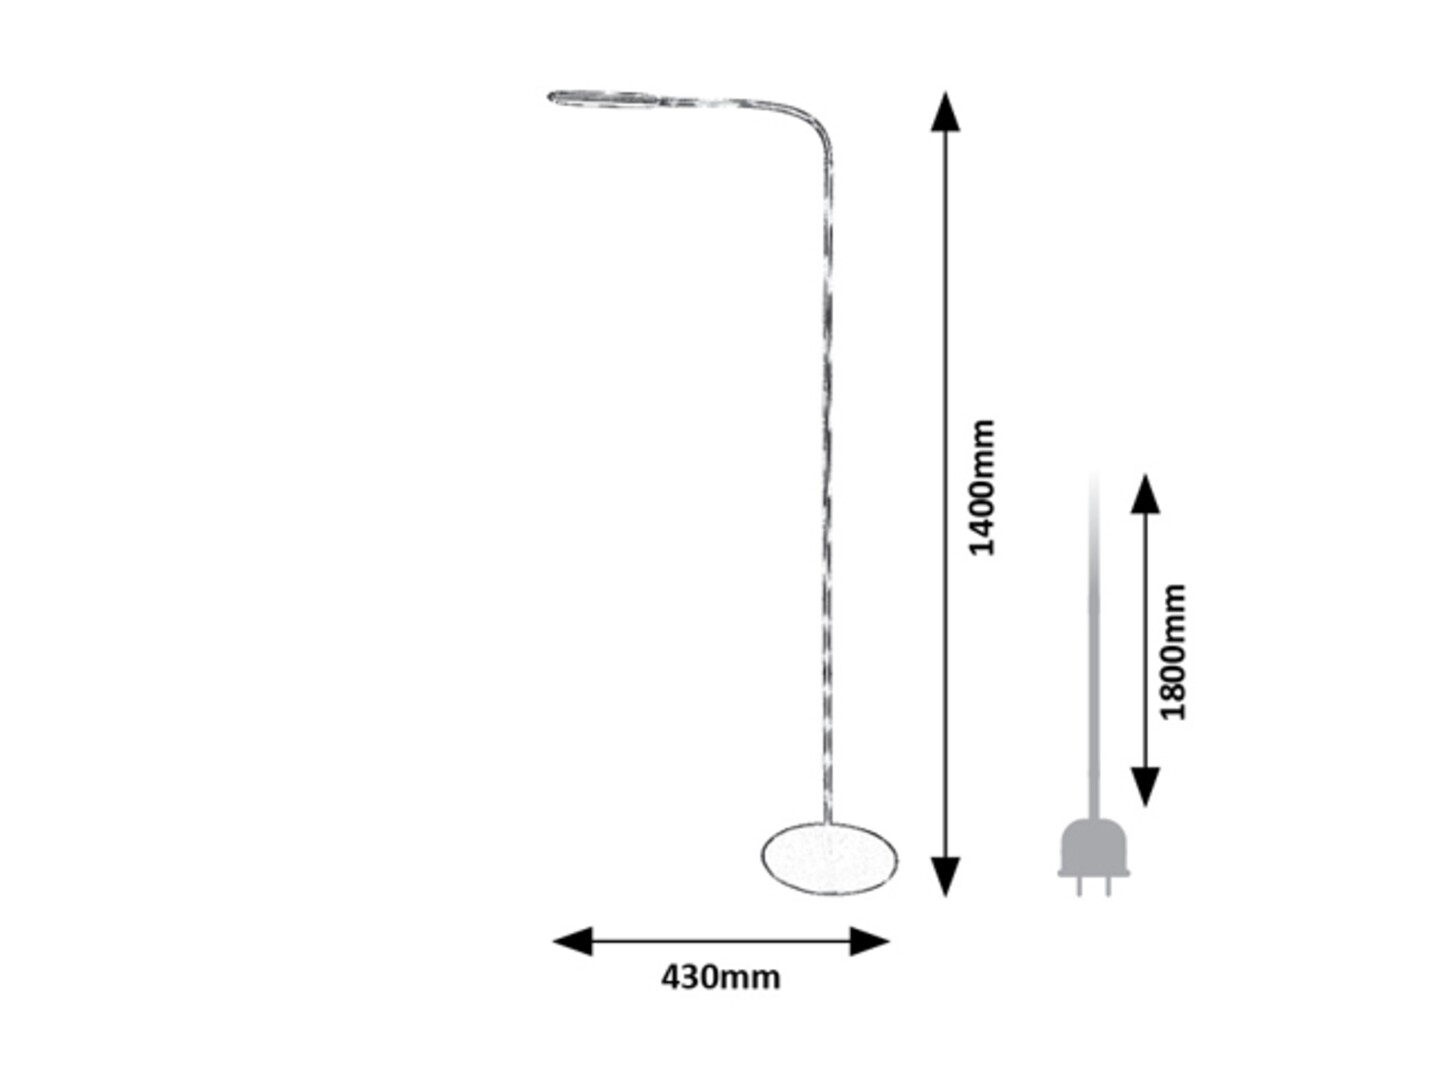 LED Stehlampe Adelmo 74010, 10W, 910lm, Metall, grau-weiß, Modern, dimmbar, 140cm